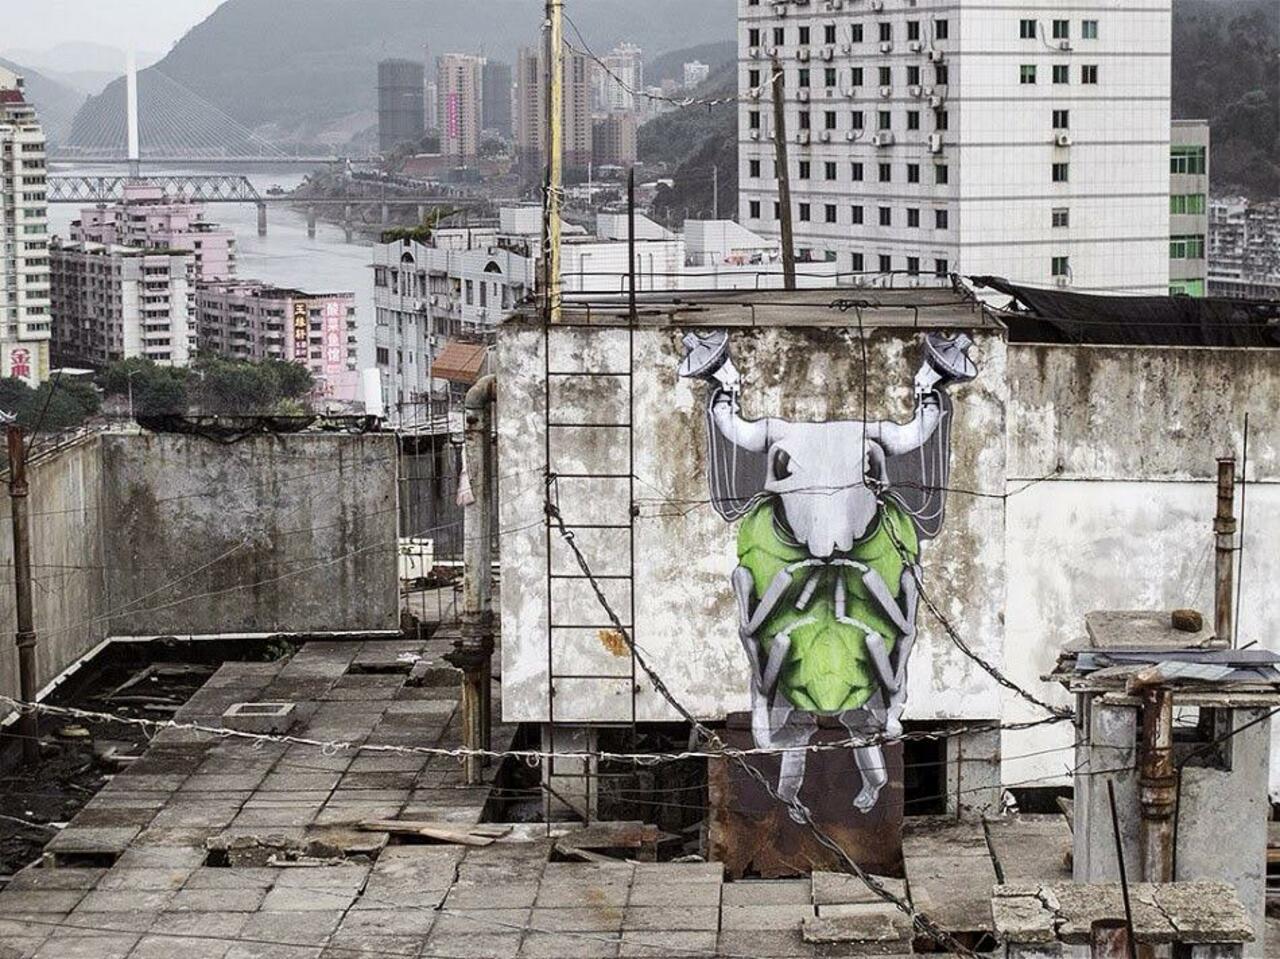 Streetart by Ludo in China

#streetart #urbanart #mural #art #graffiti http://t.co/FqbtZtpe8e